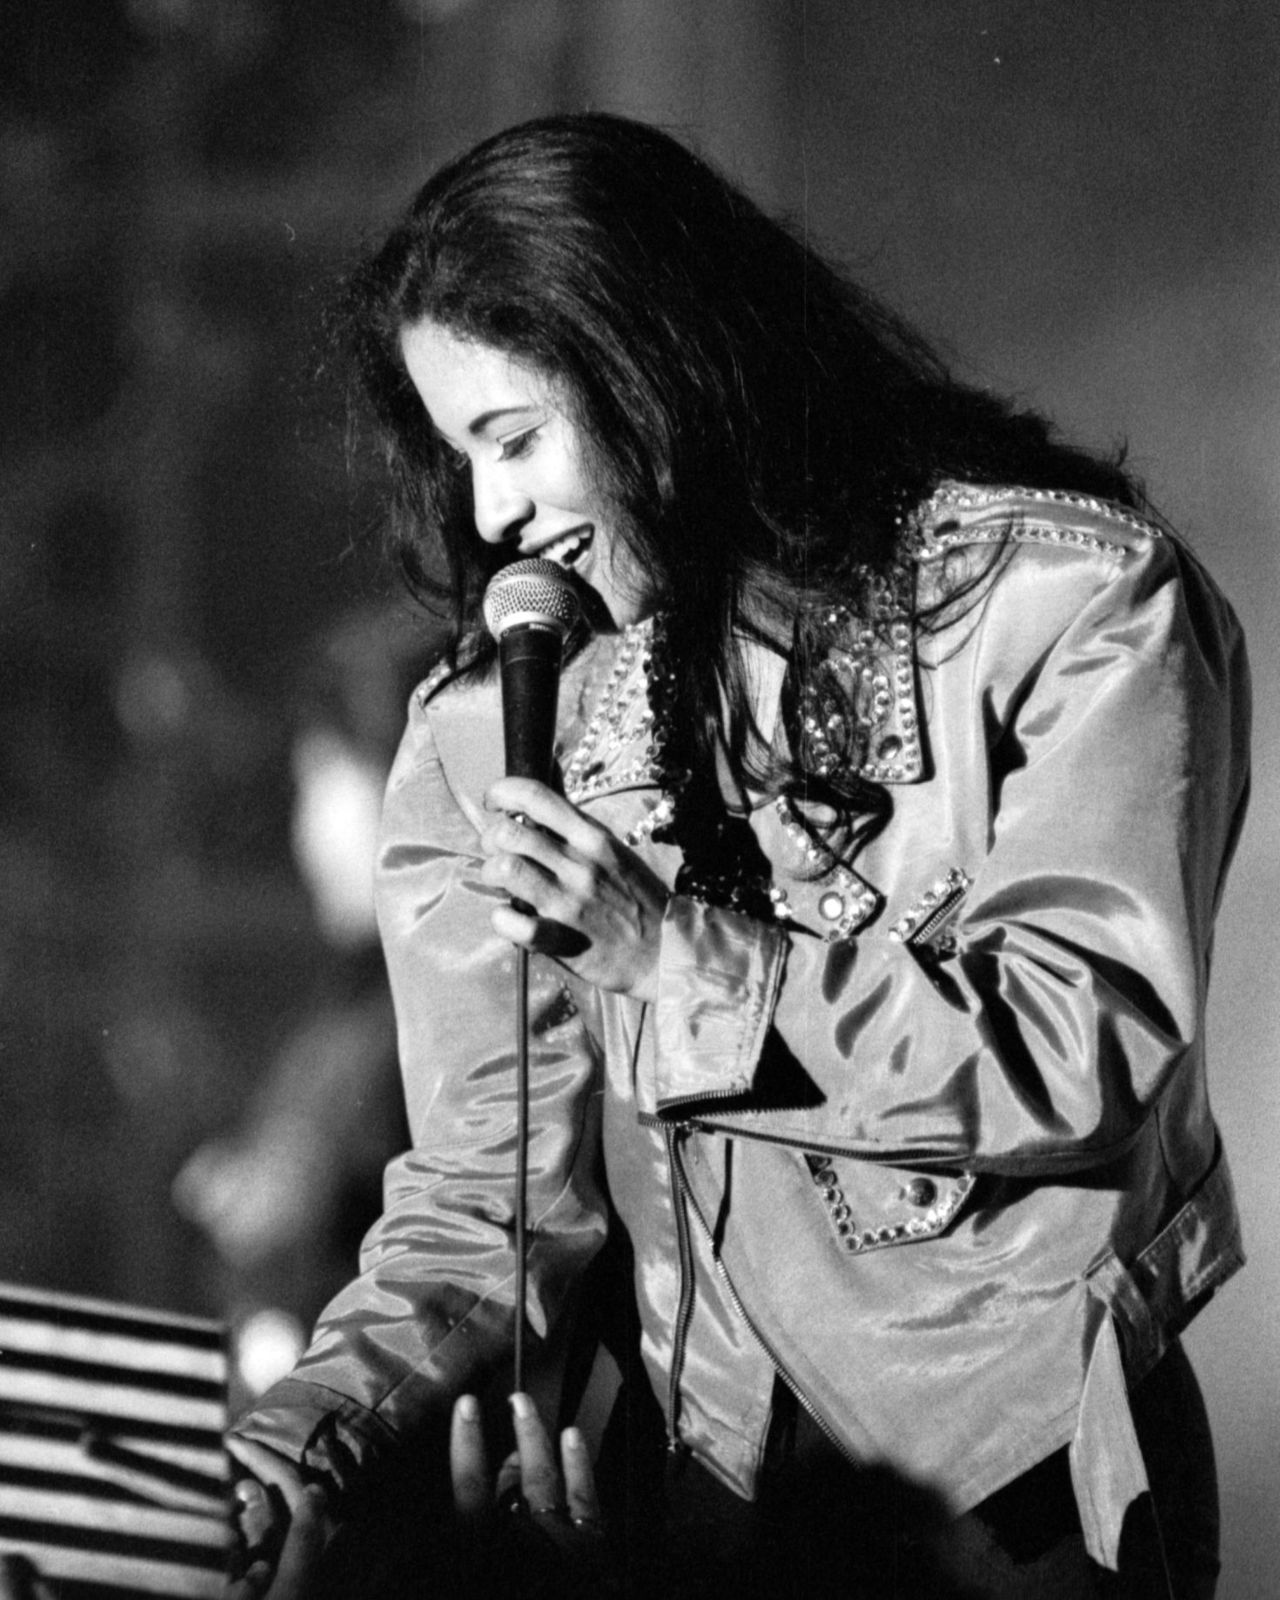 Selena Quintanilla was a singer.